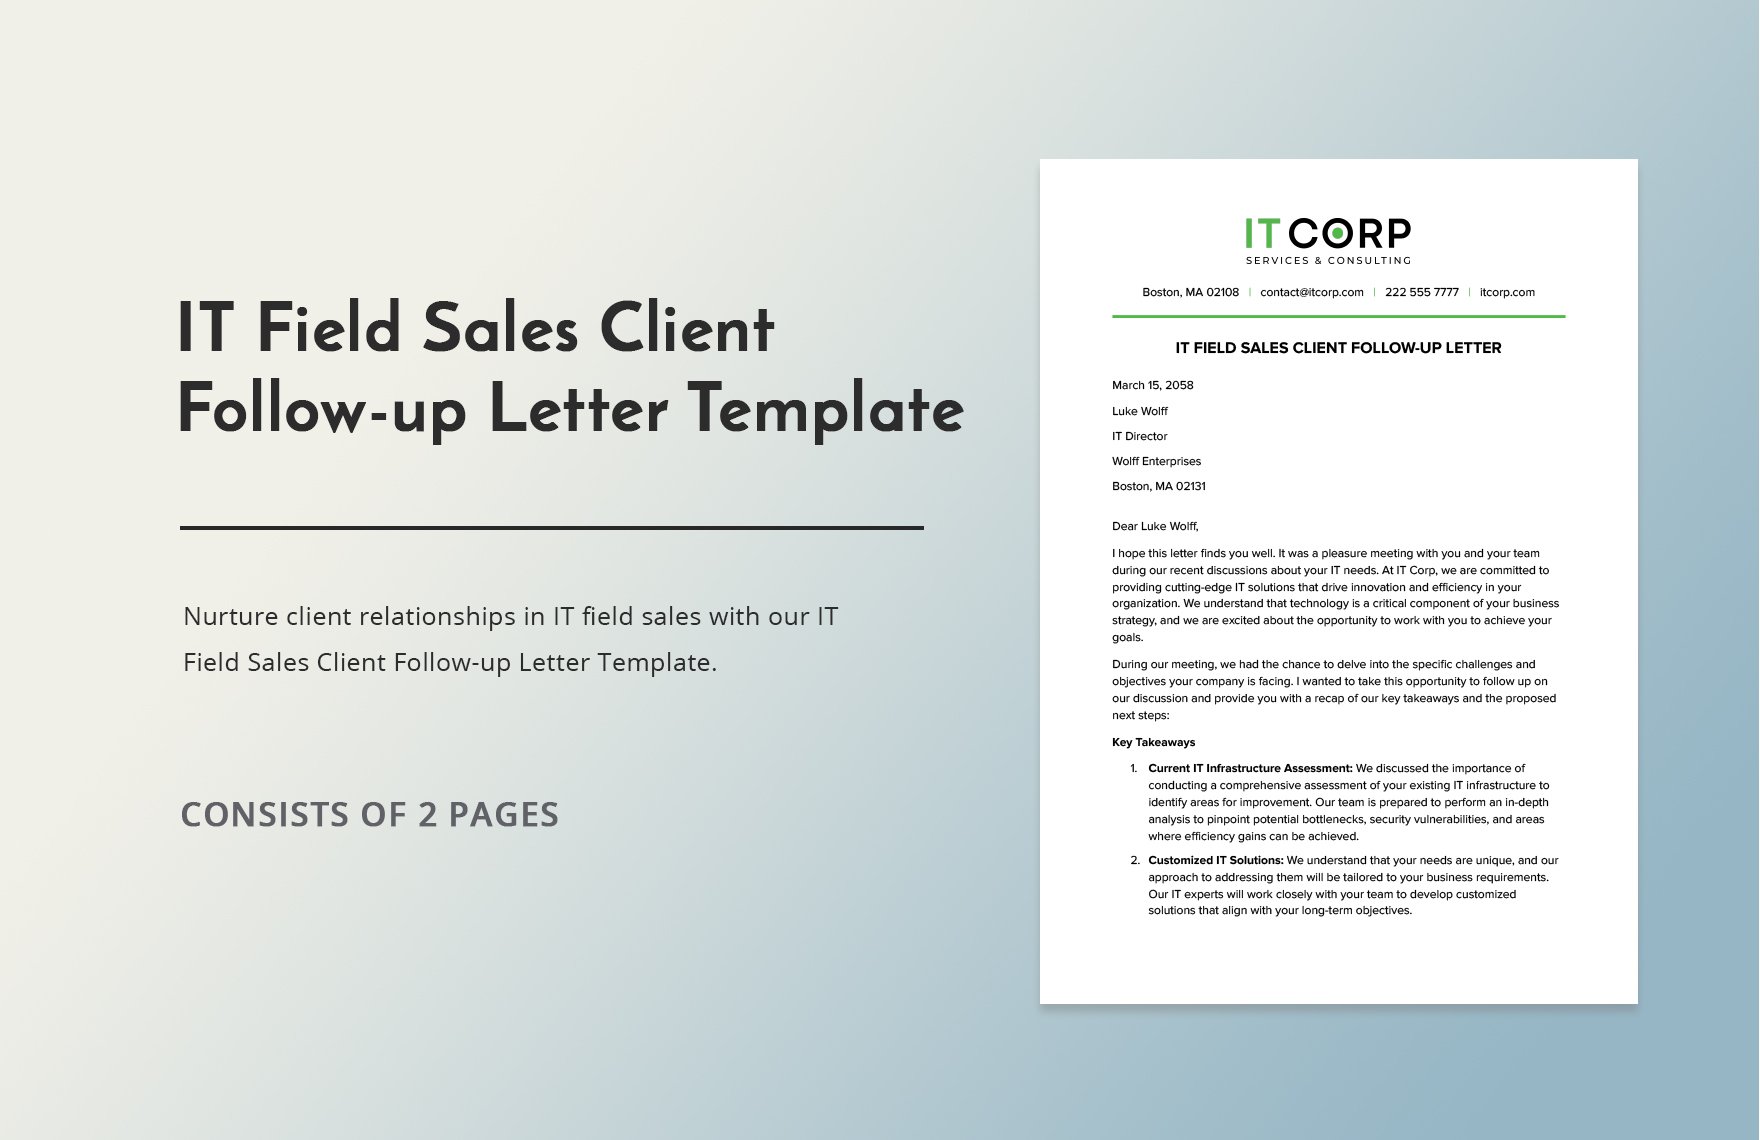 IT Field Sales Client Follow-up Letter Template